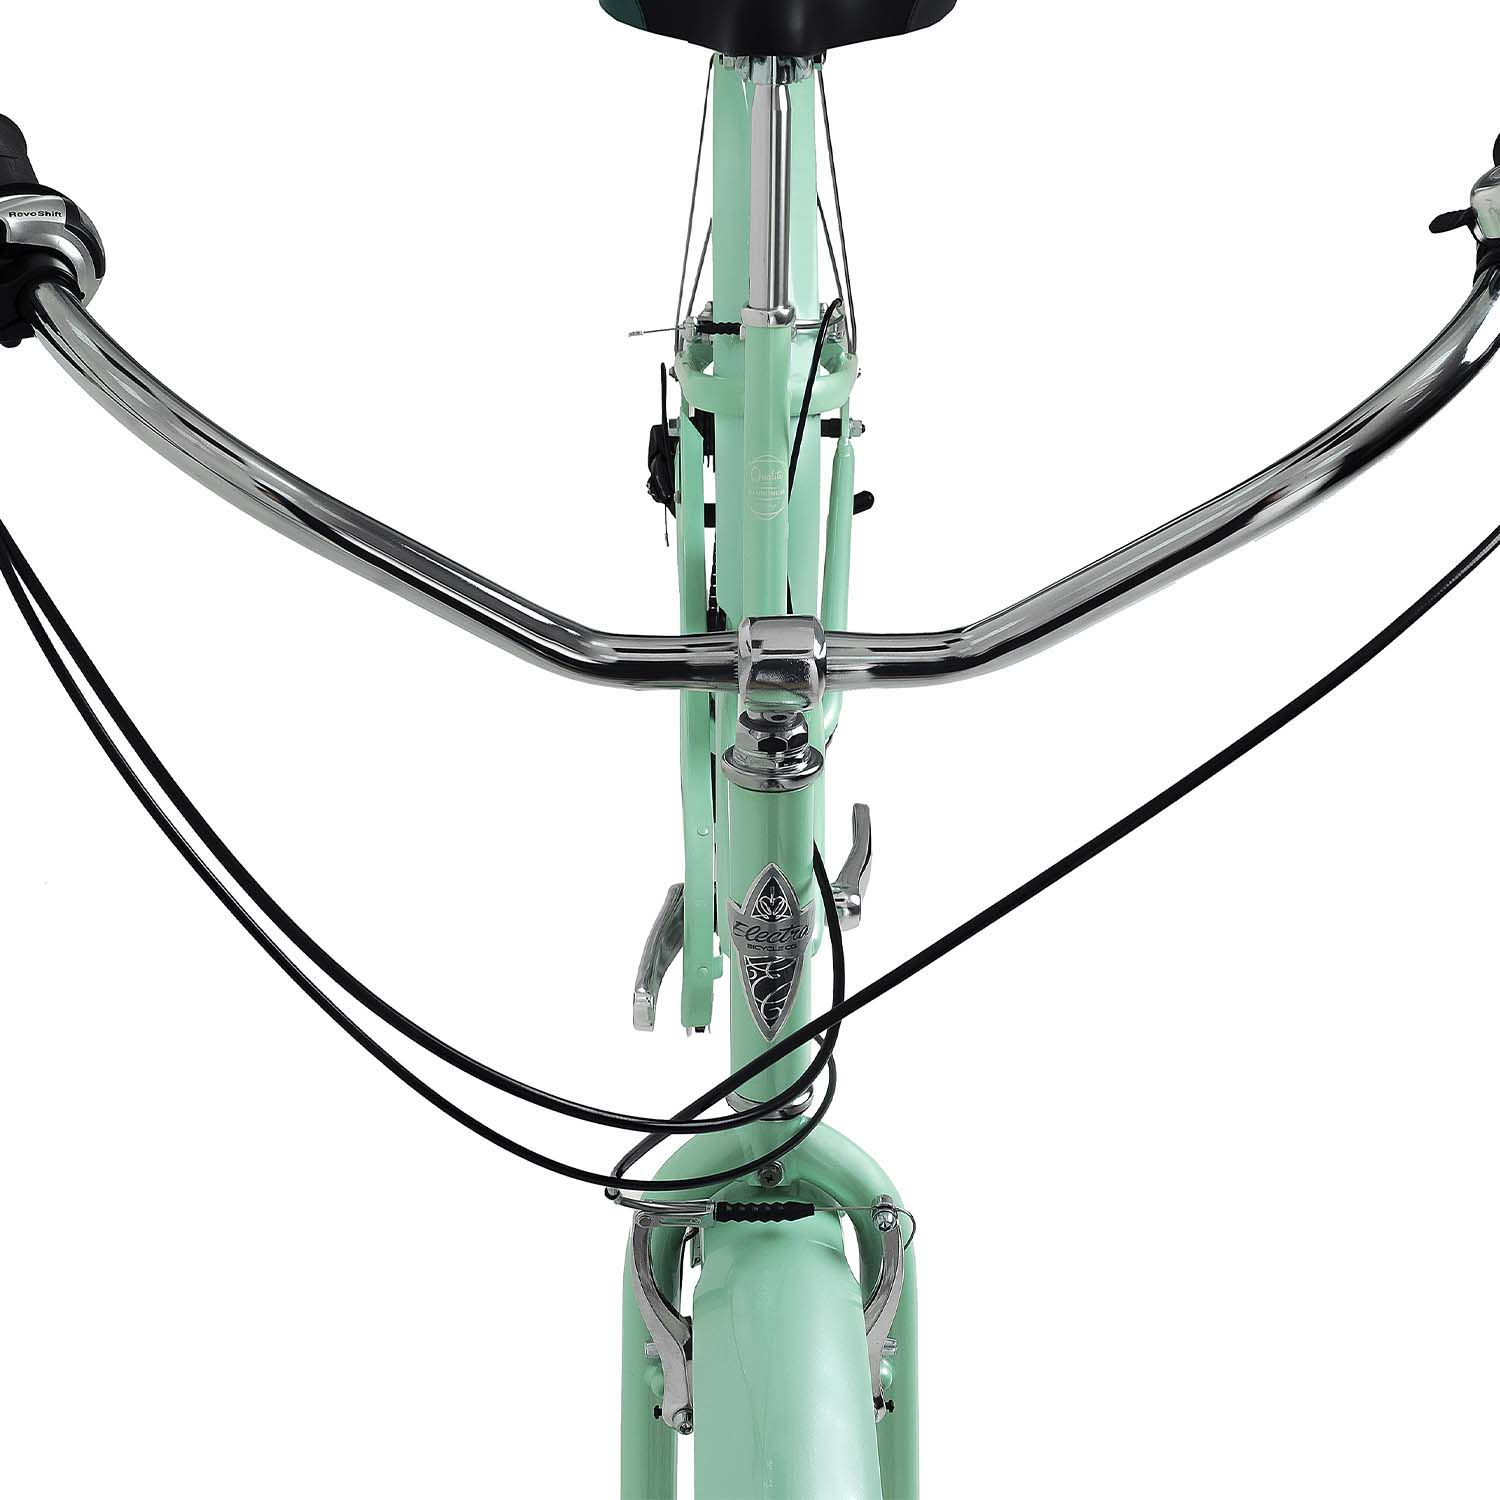 Велосипед Electra Cruiser Lux 7D Ladies 26 2022 Green